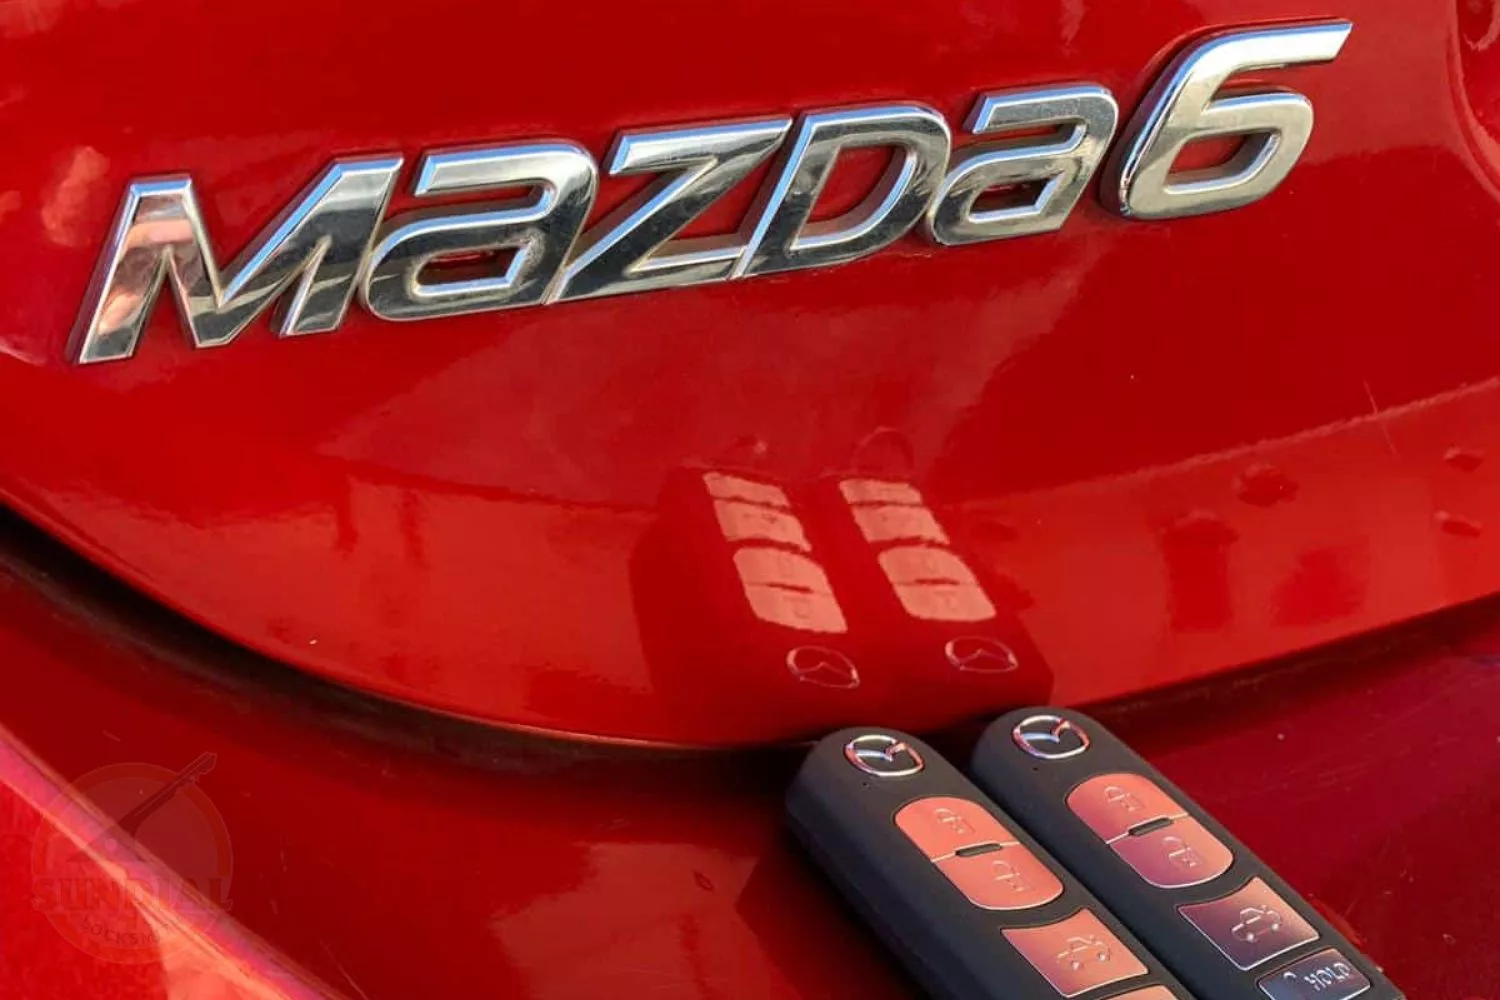 Red Mazda6 car logo with key fobs.